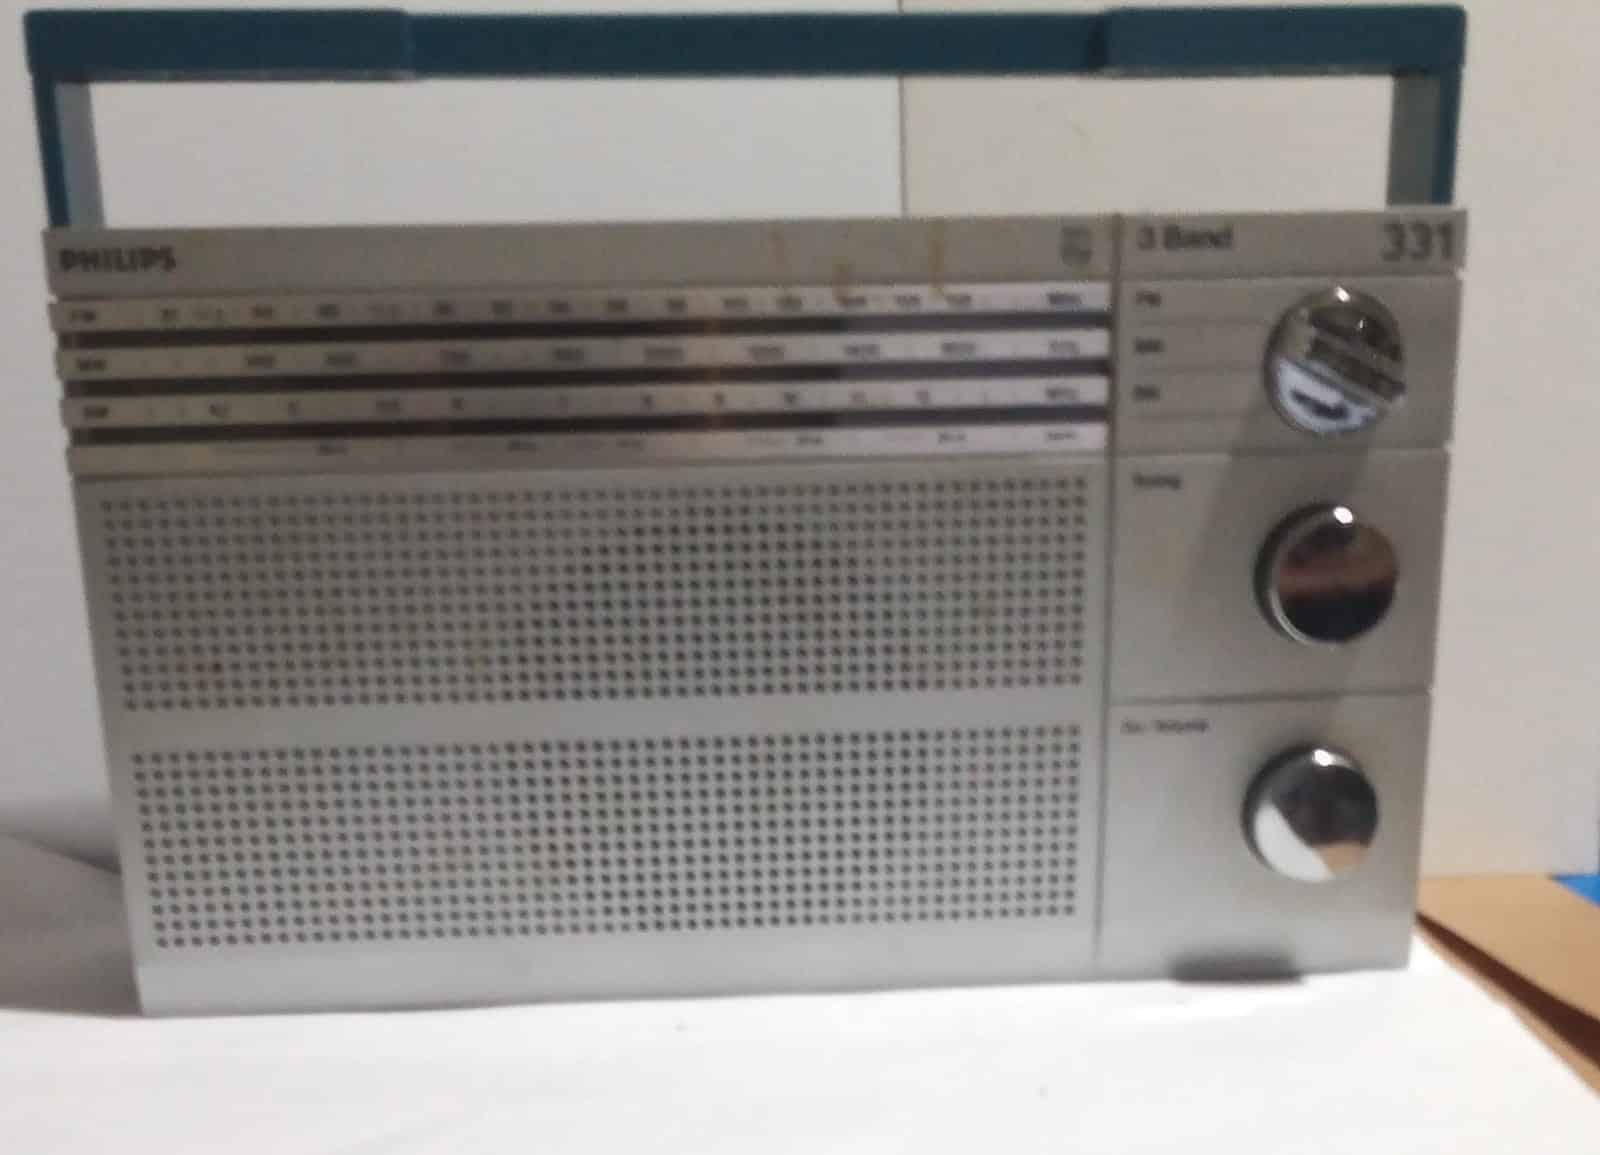 Radio Portatil Philips AL 331 Casa do Colecionador